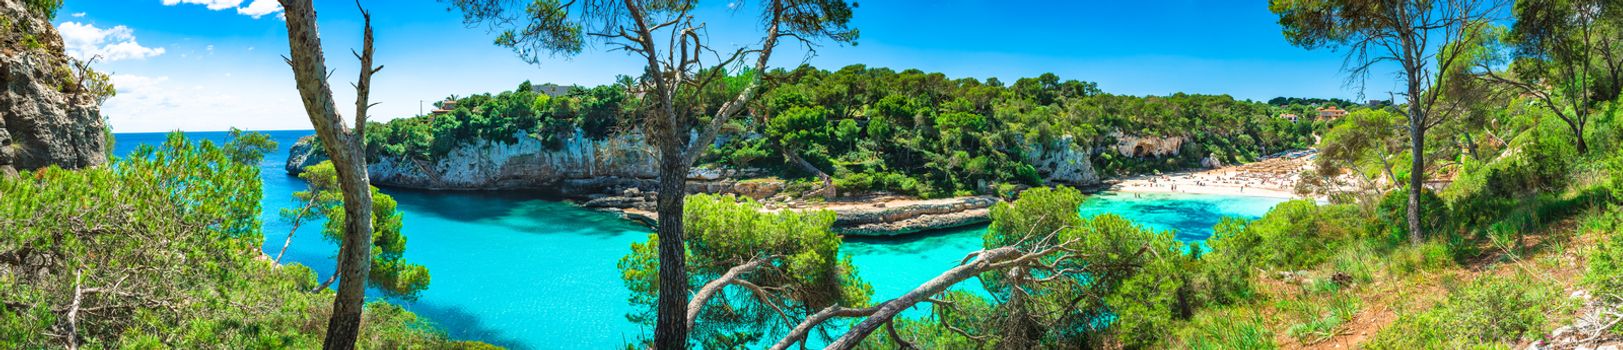 Spain Mallorca island, bay of Cala Llombards beach, Mediterranean Sea